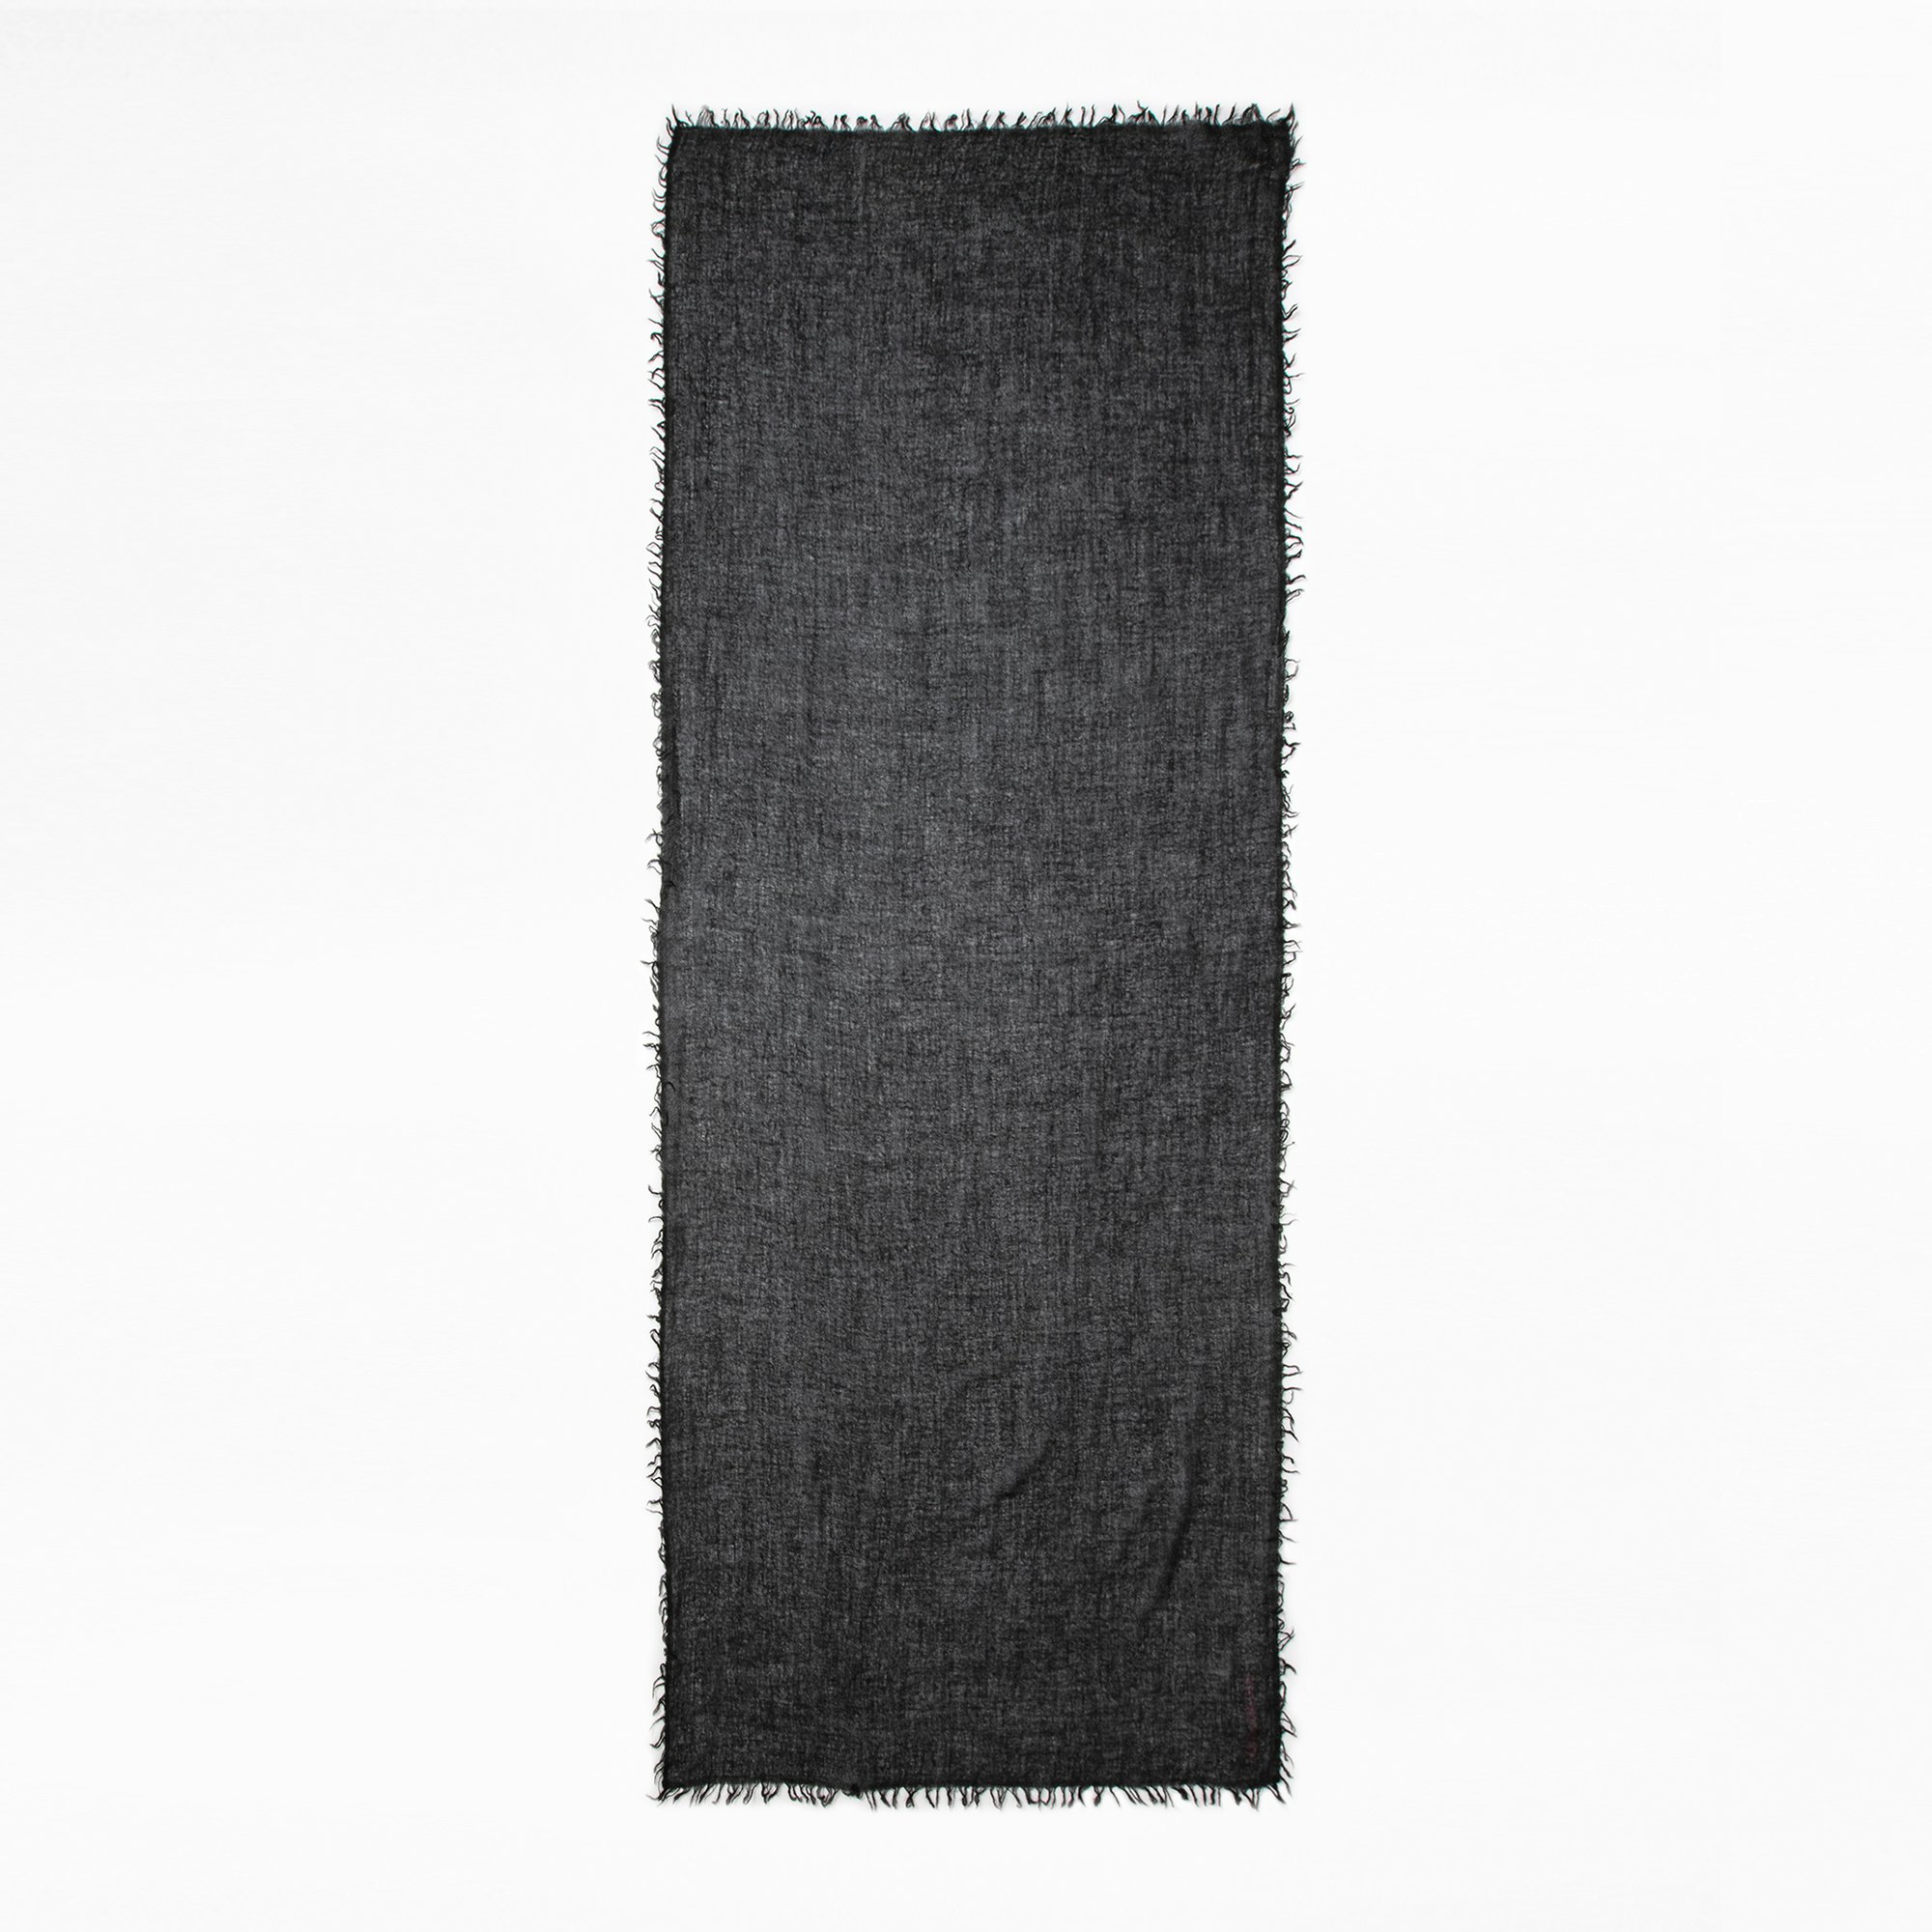 Nuage マフラー - Women’s black cashmere scarf